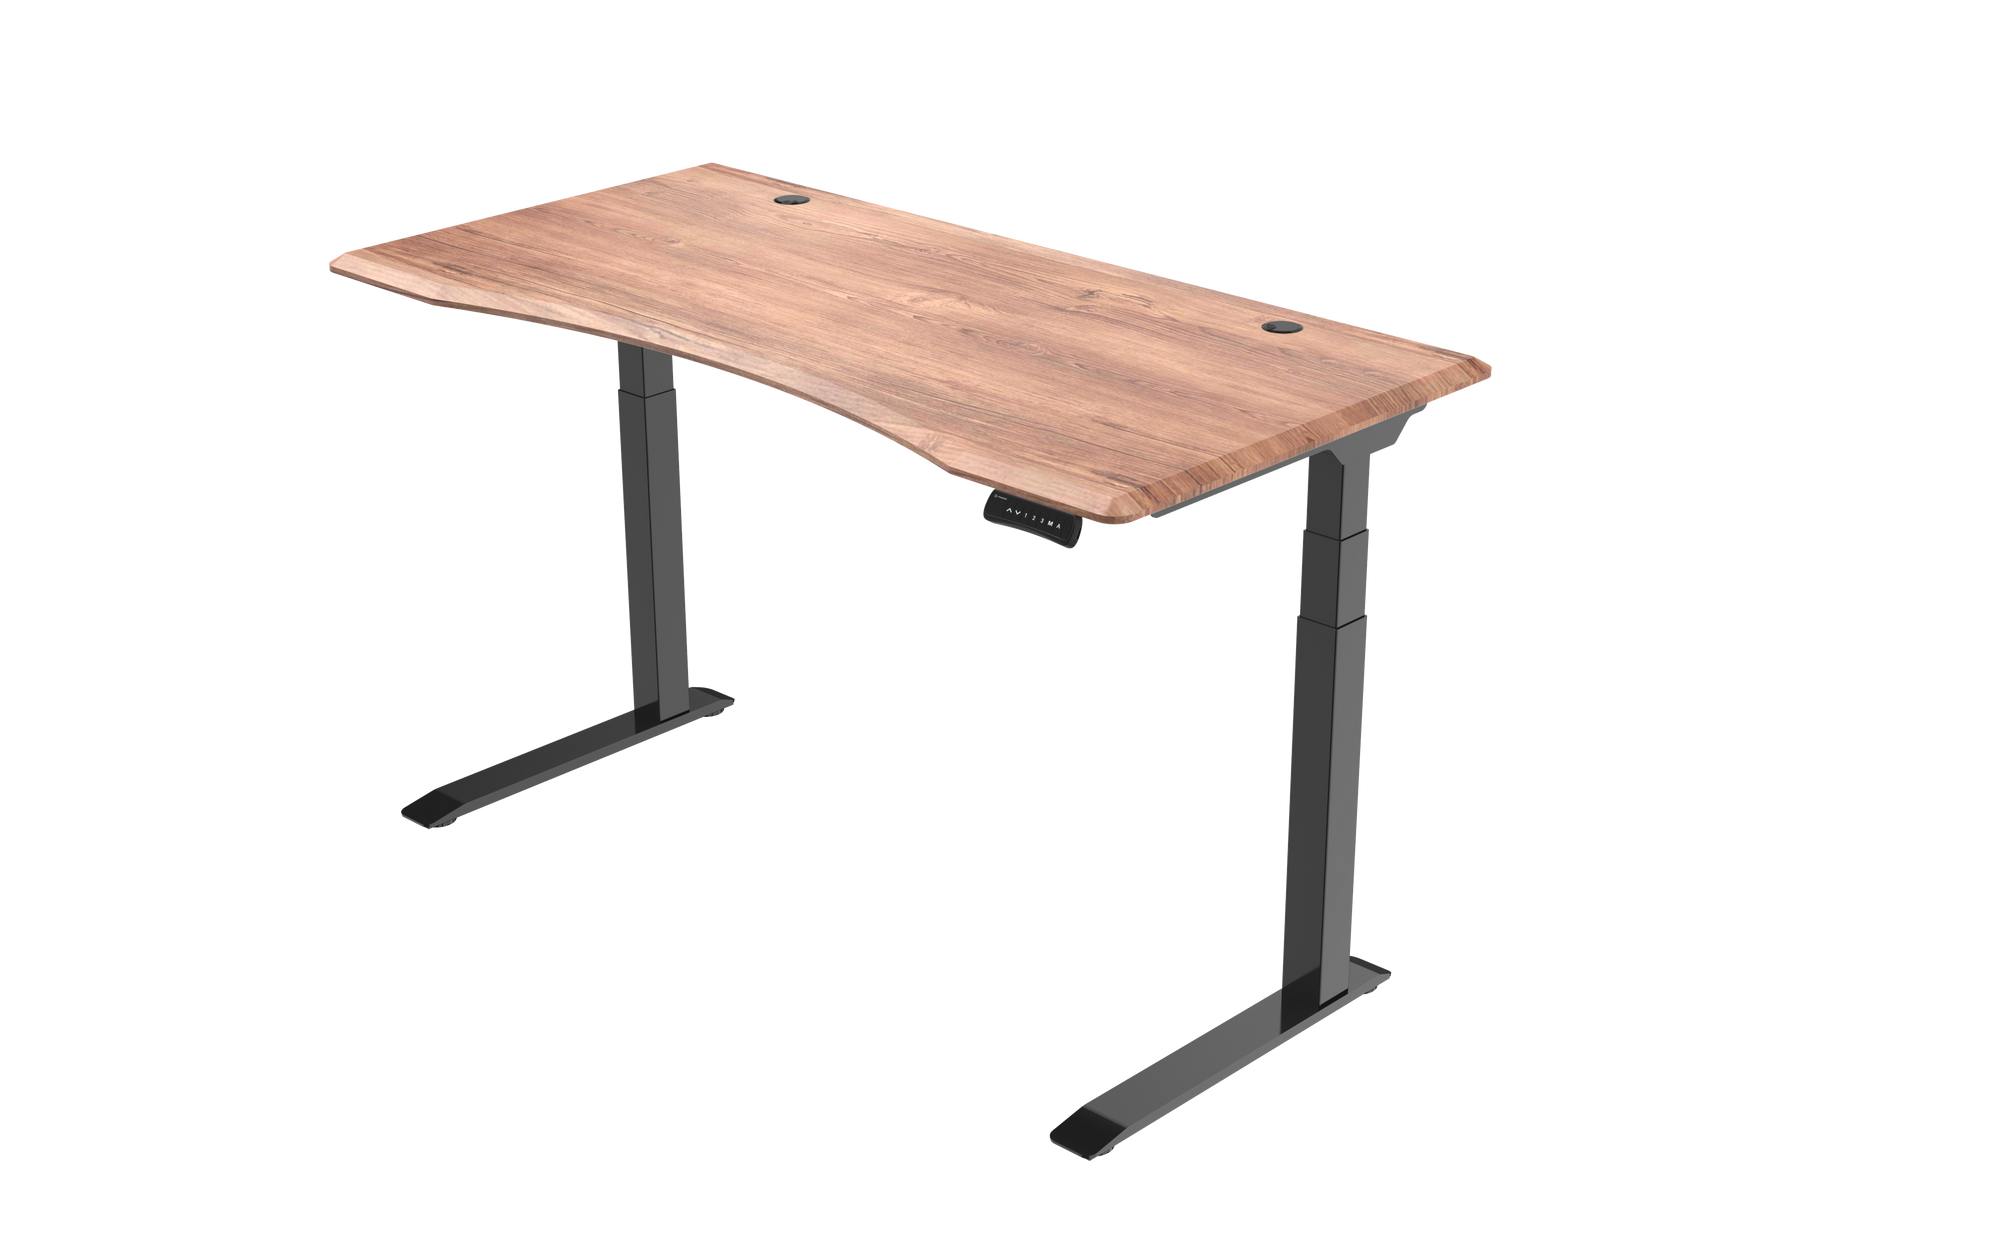 Electric Standing Desk 60x30, Sit-Stand Adjustable Desk